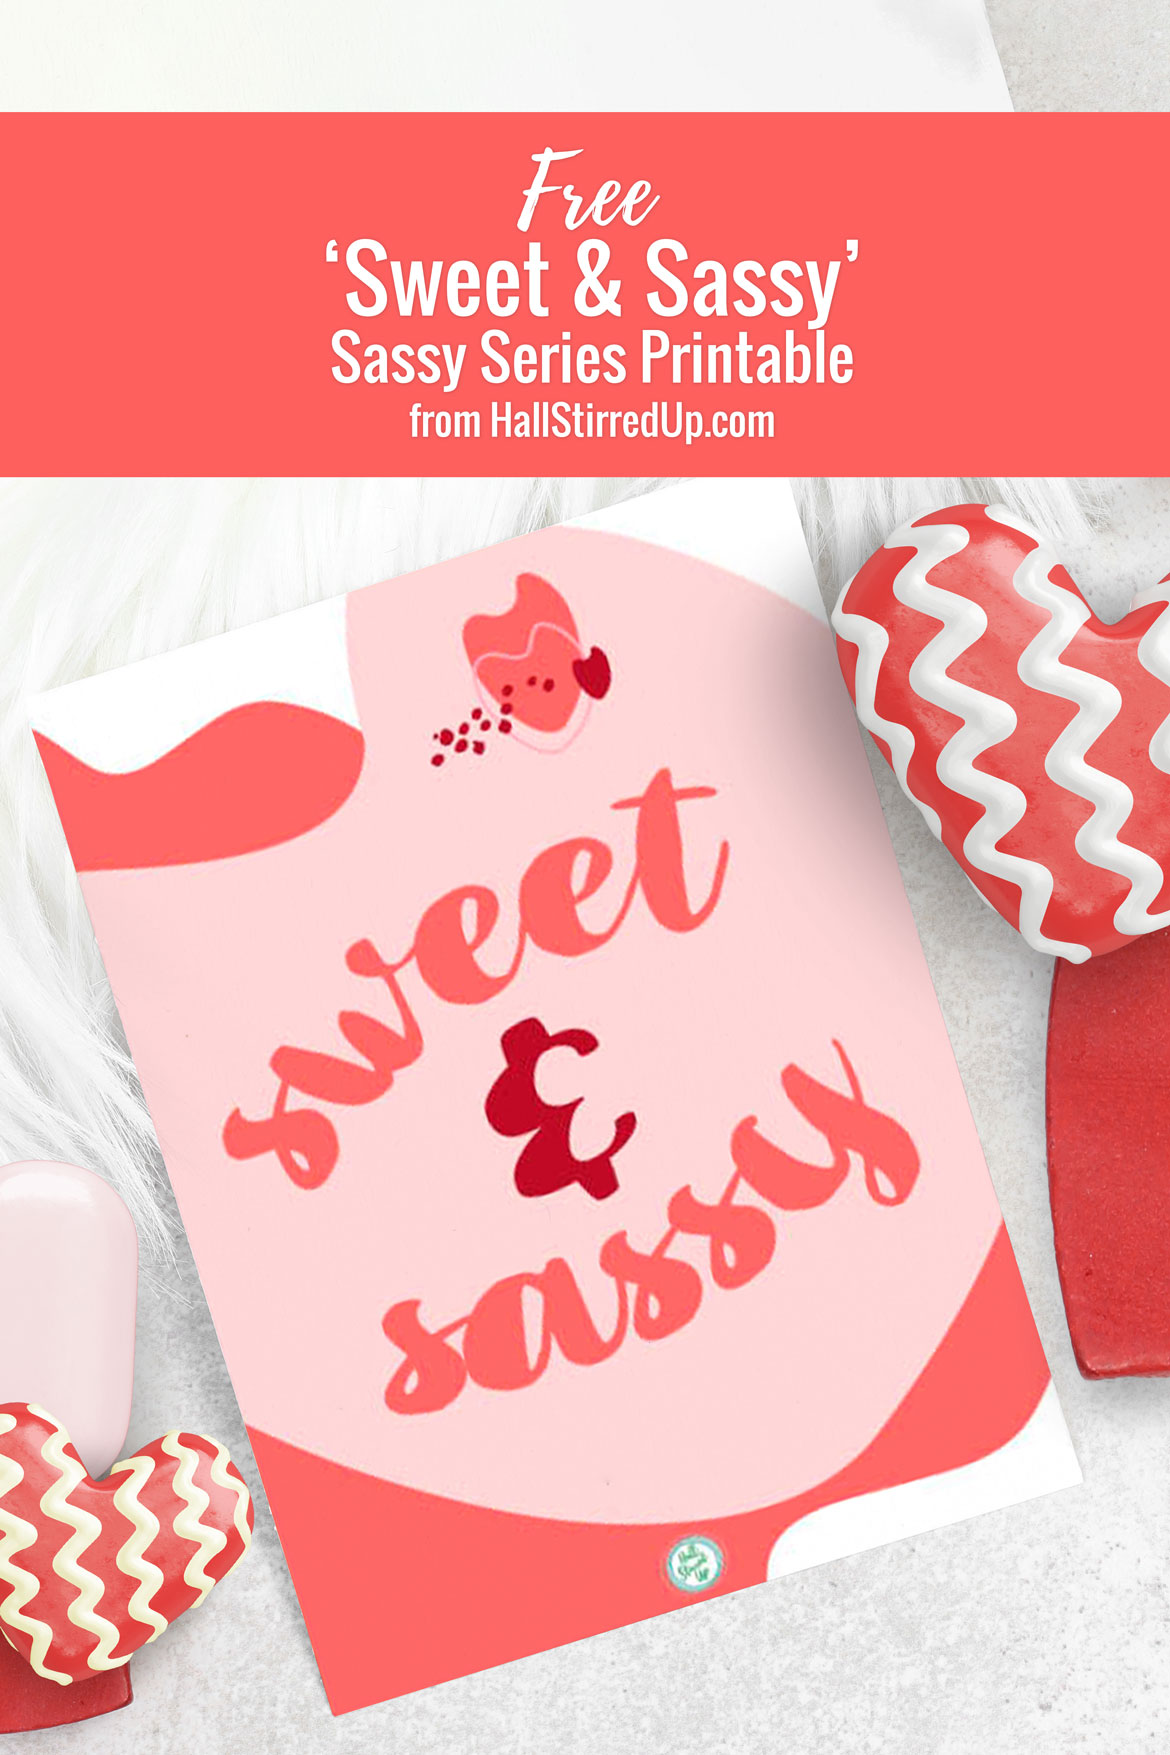 Sweet AND Sassy It's a fun new Sassy Series printable